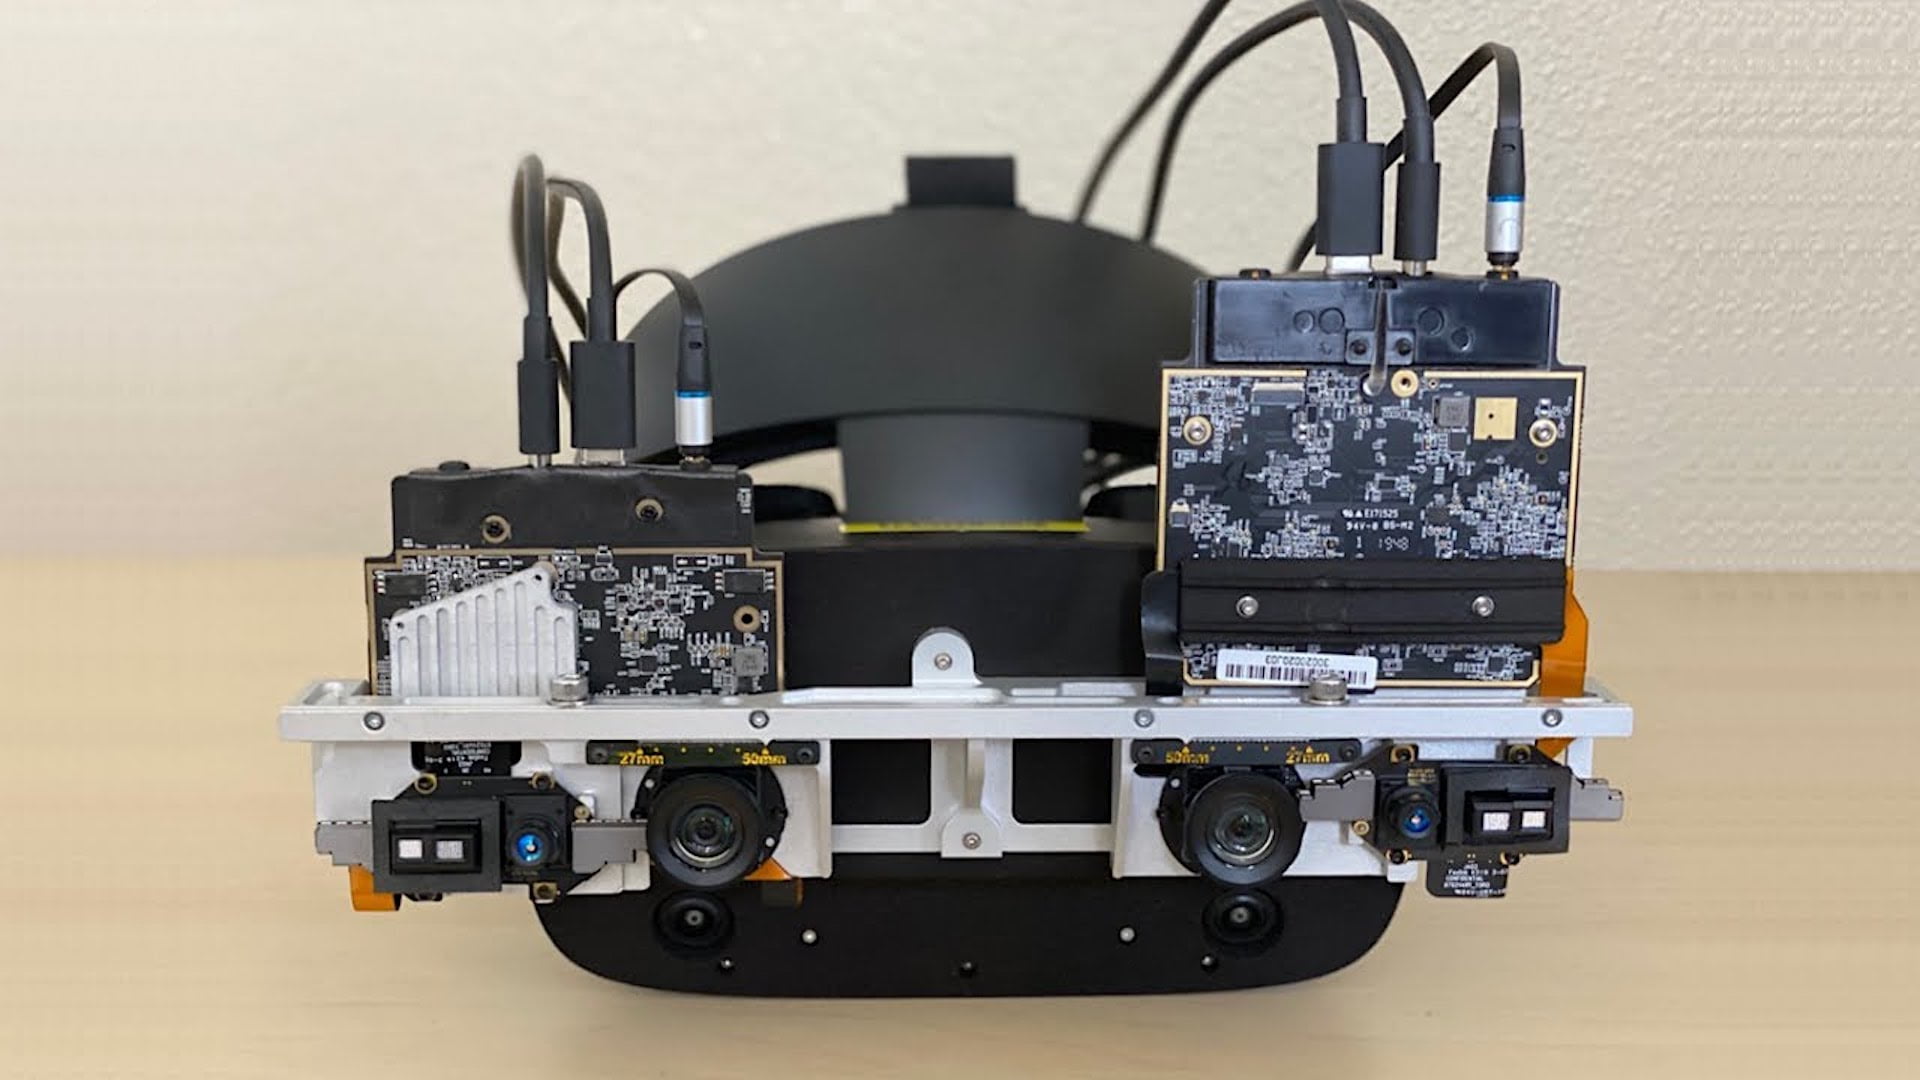 NeuralPassthrough: Meta shows AI-based AR for VR headsets